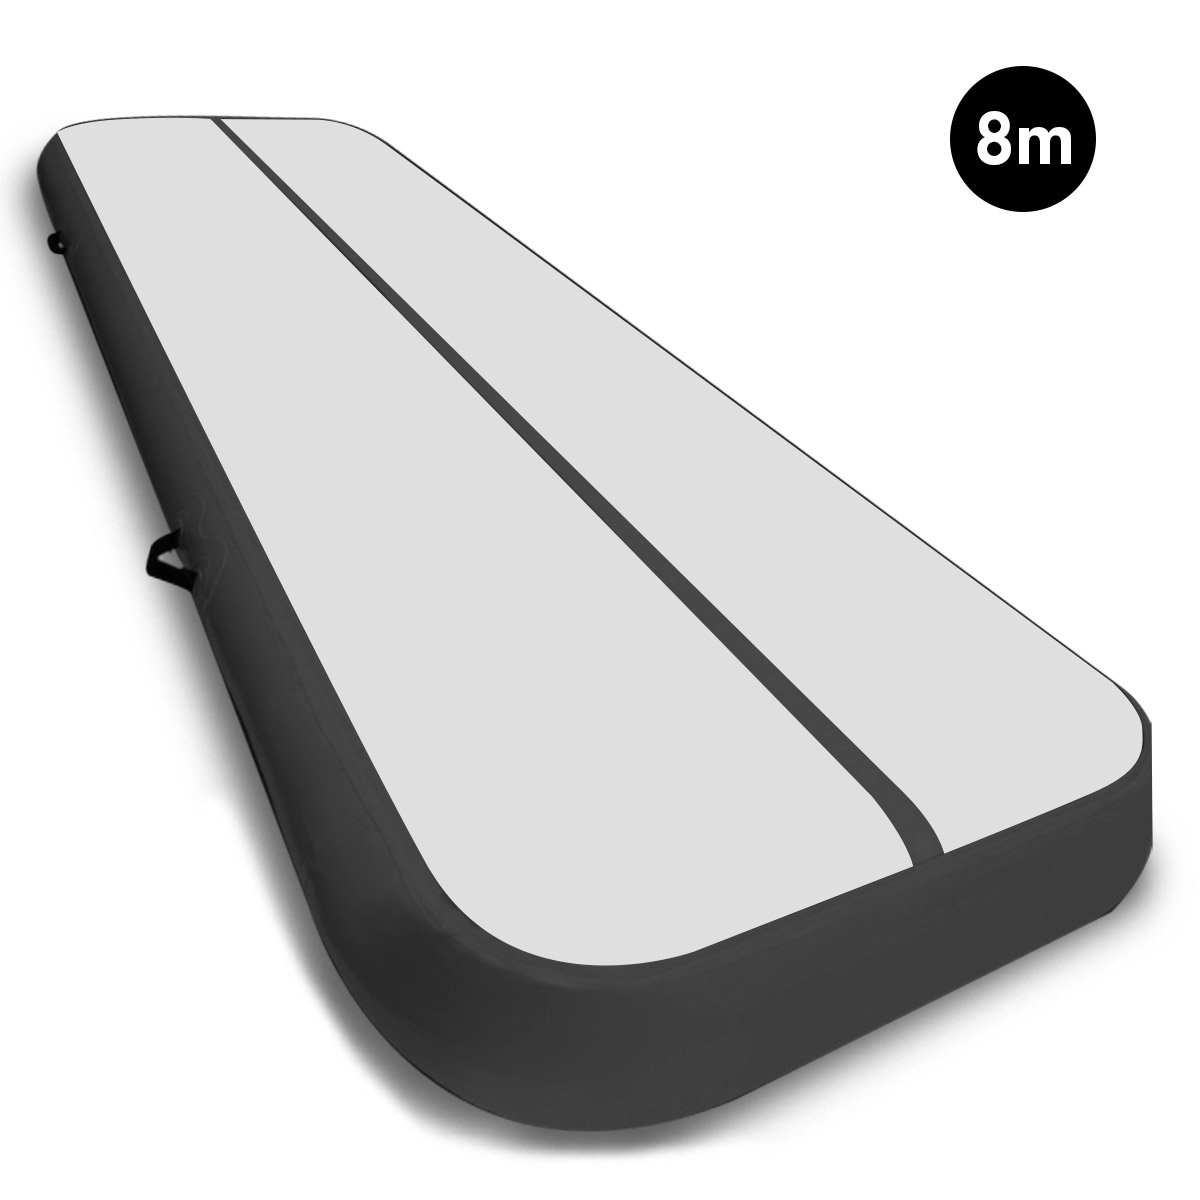 8m x 1m Air Track Inflatable Tumbling Mat Gymnastics - Grey Black 1